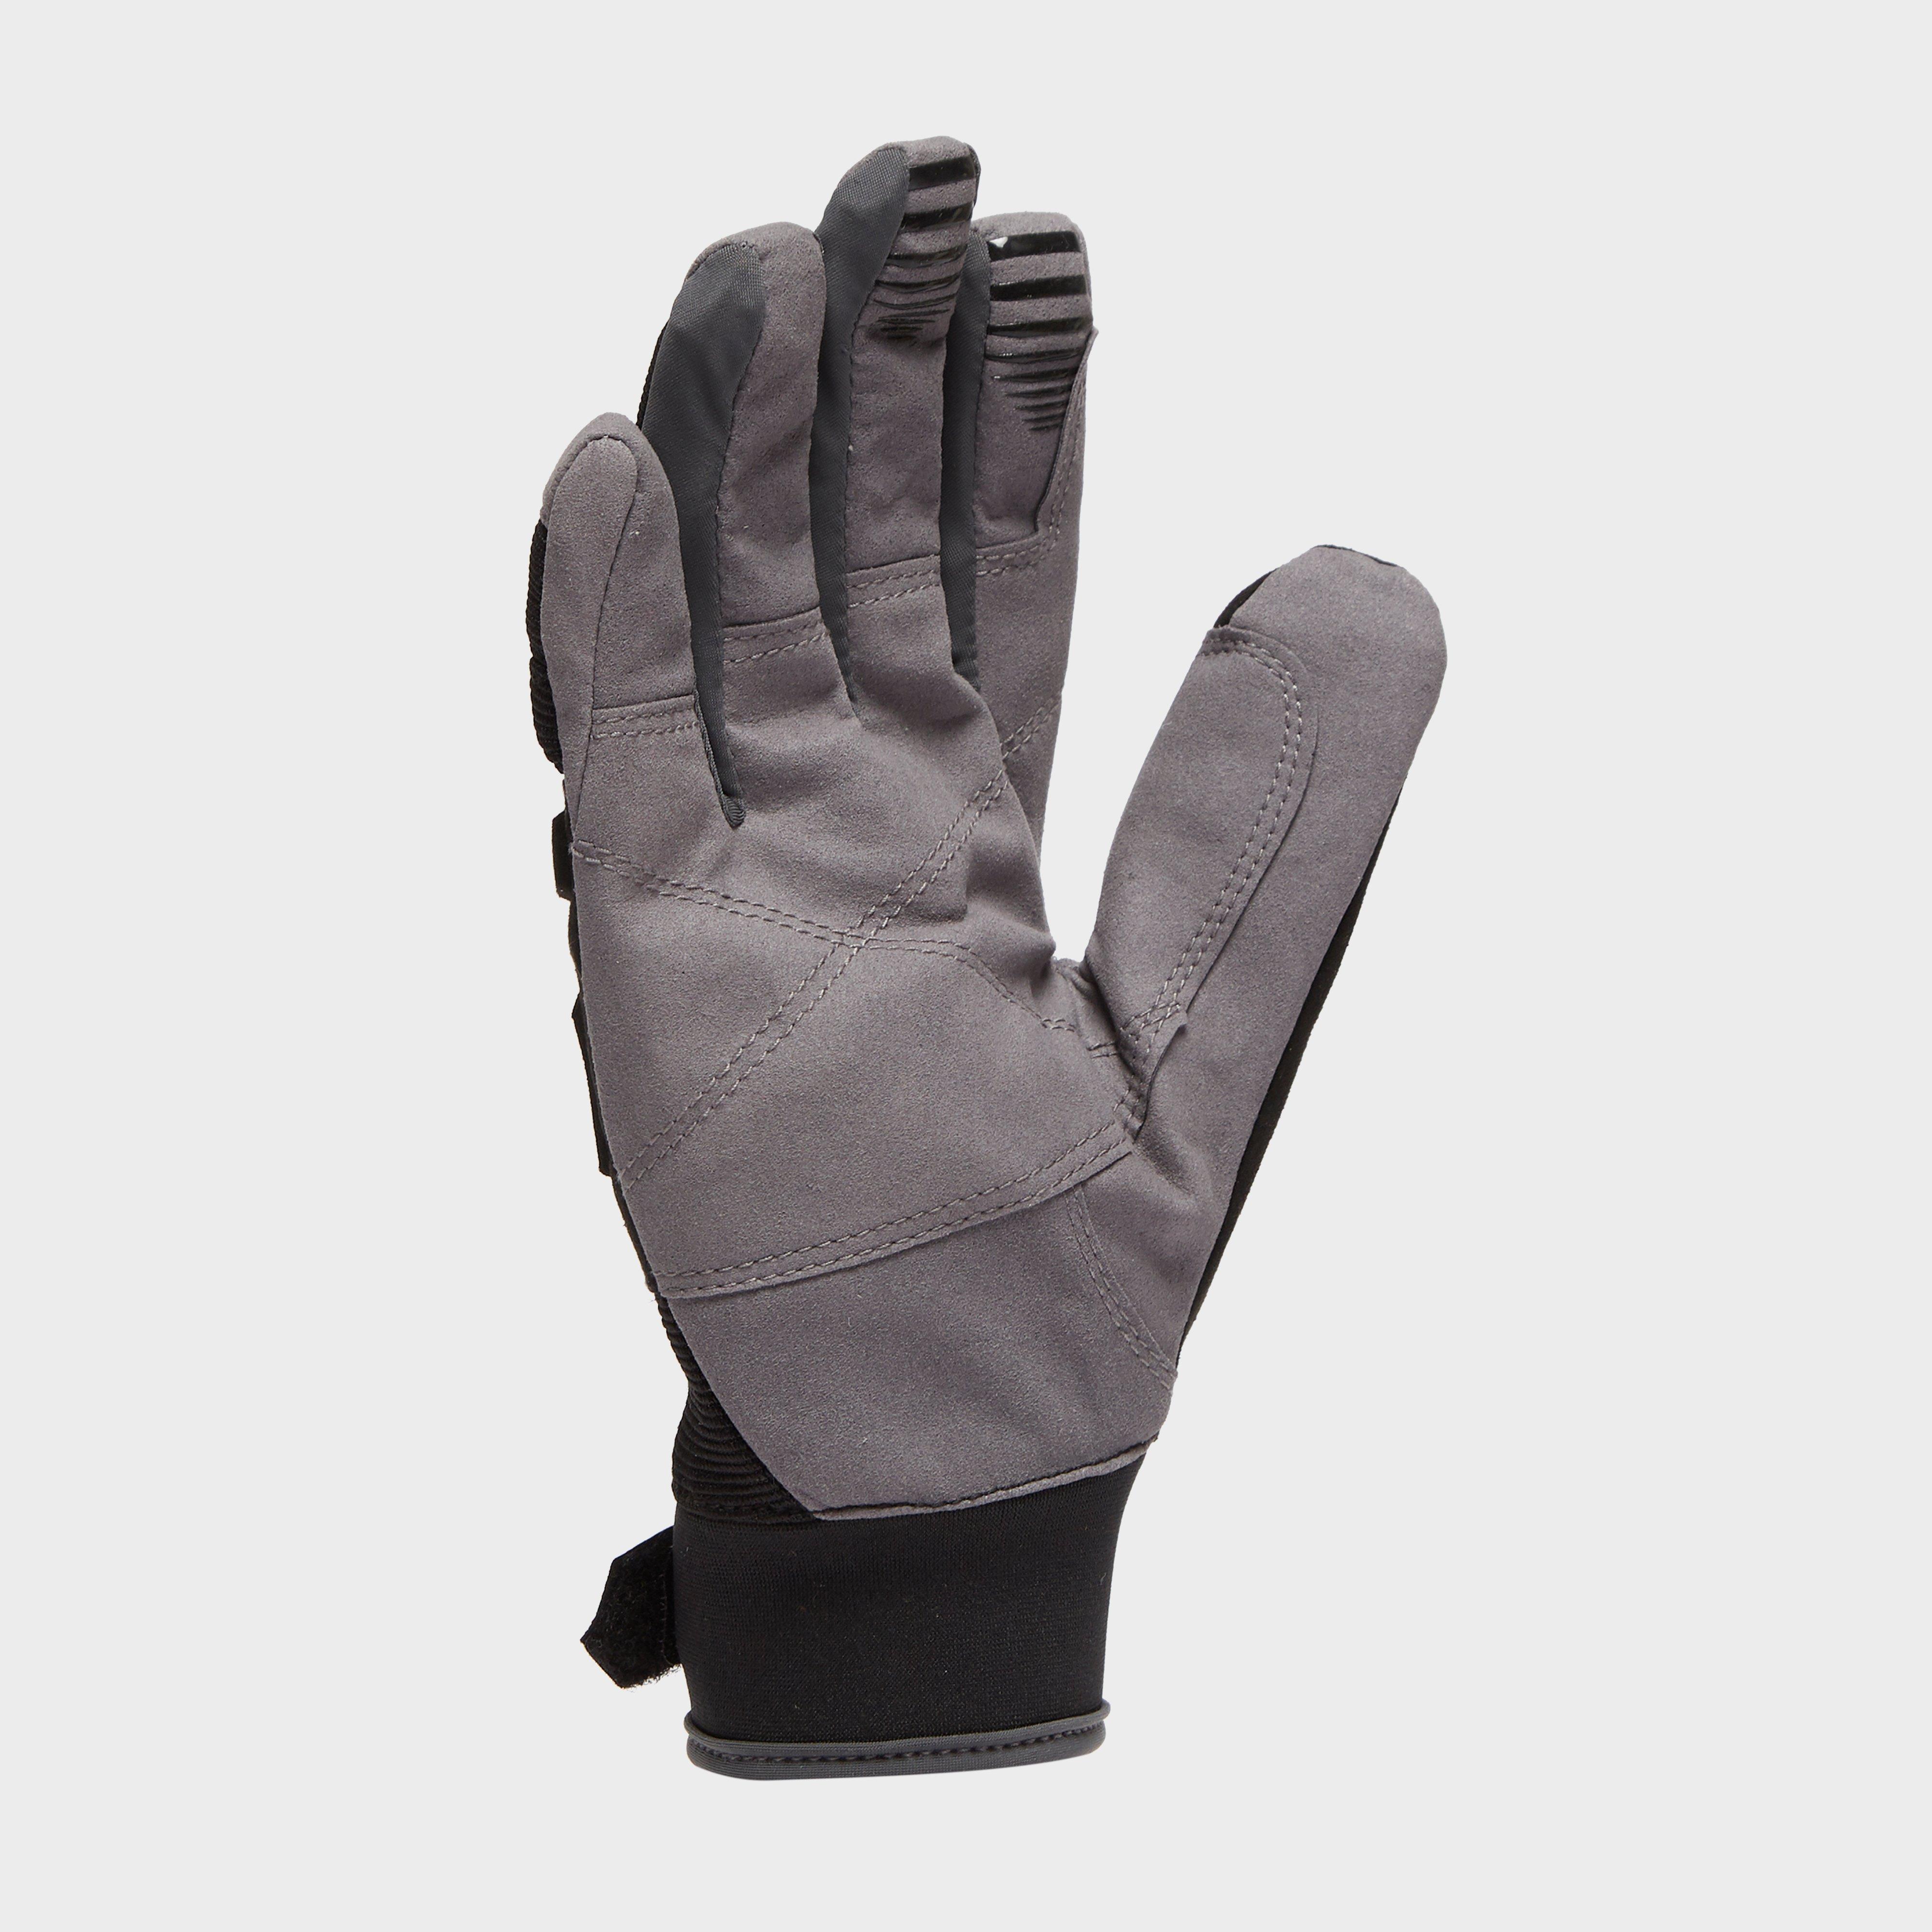 Sealskinz Waterproof All Weather MTB Glove Review